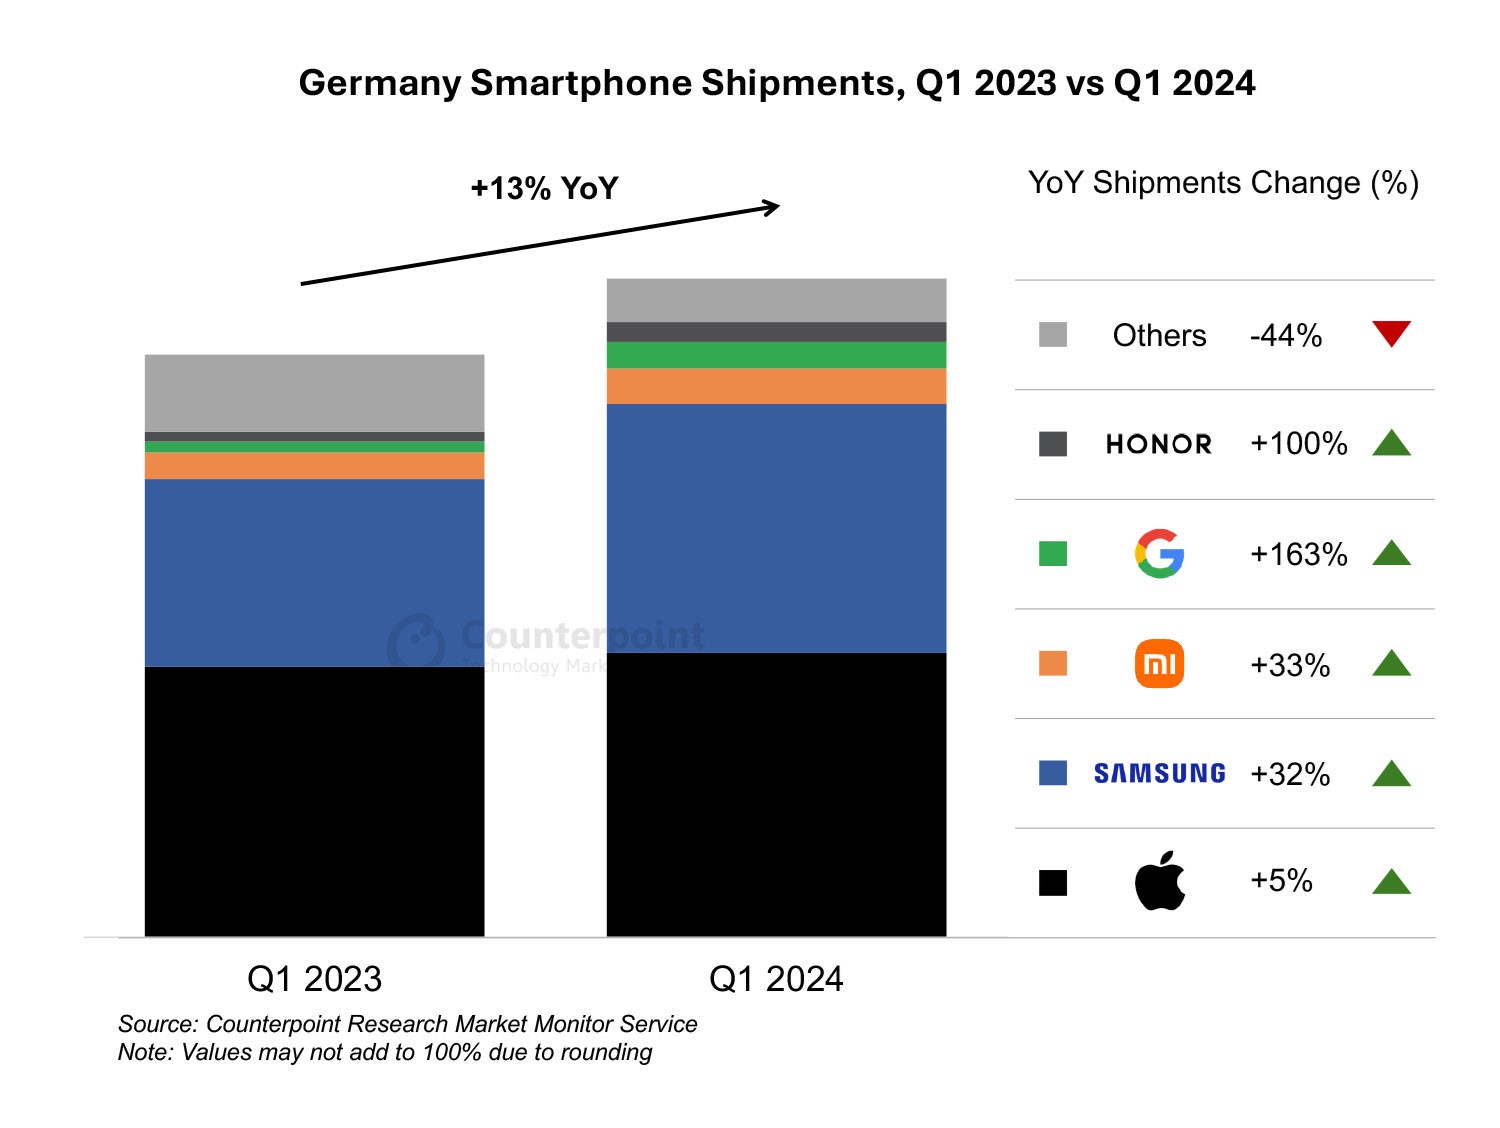 Germany Smartphone Market Share Q1 2024